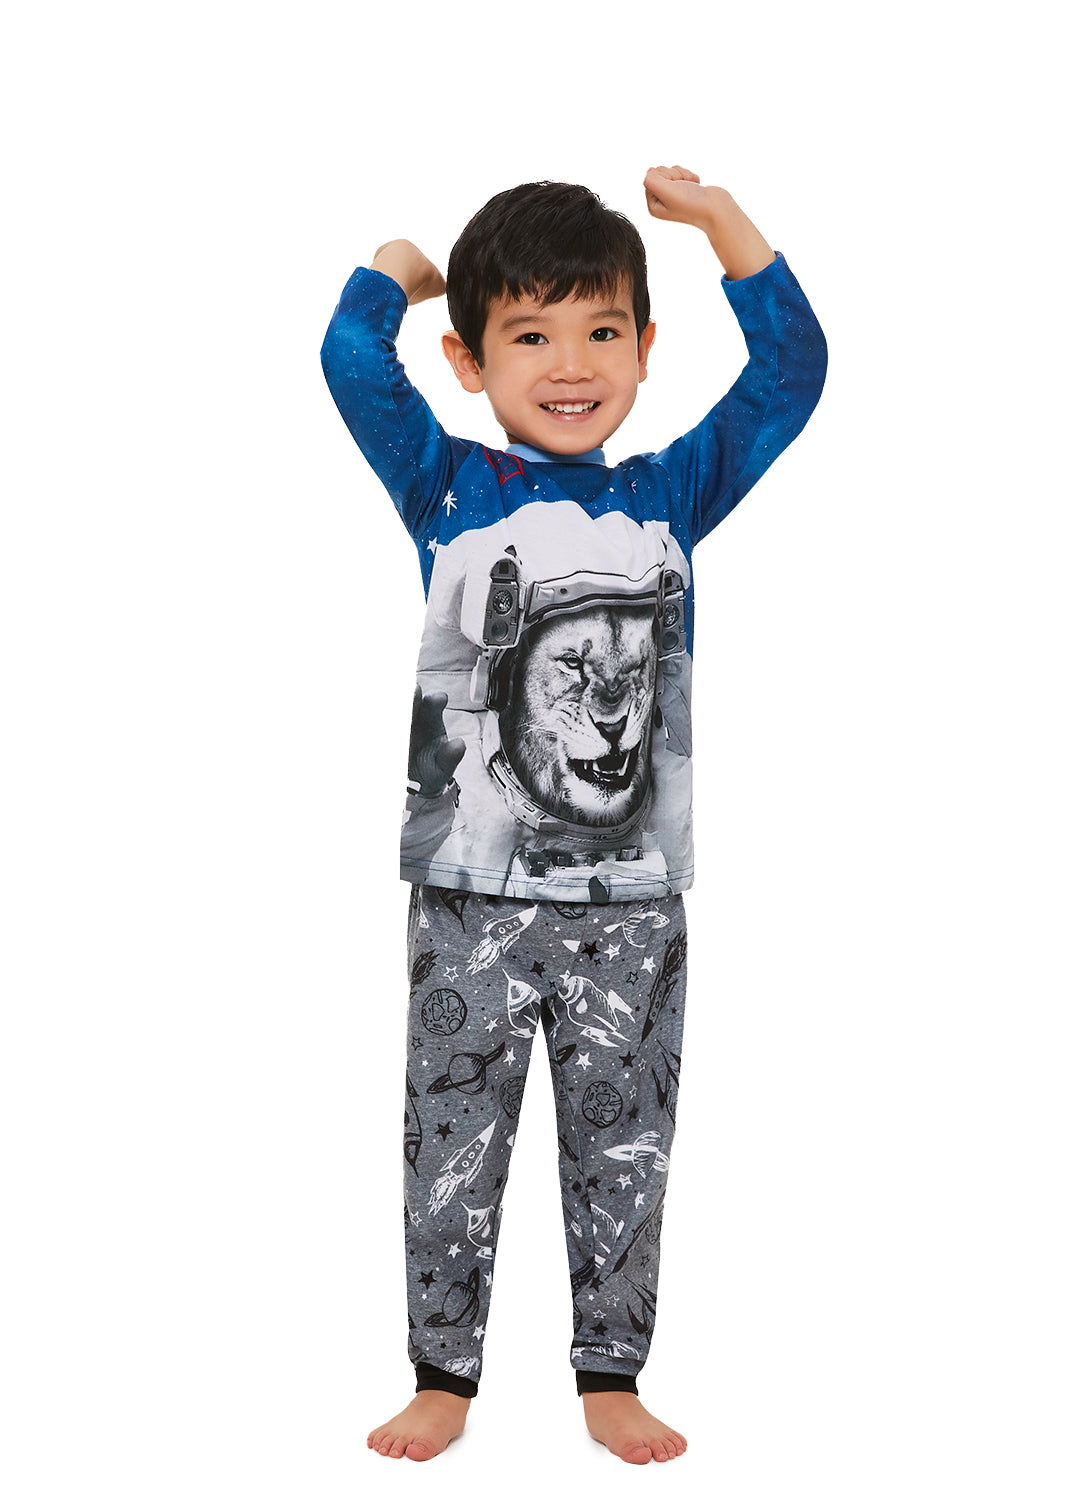 Kid wearing Astronaut Pajama Set 2 pieces